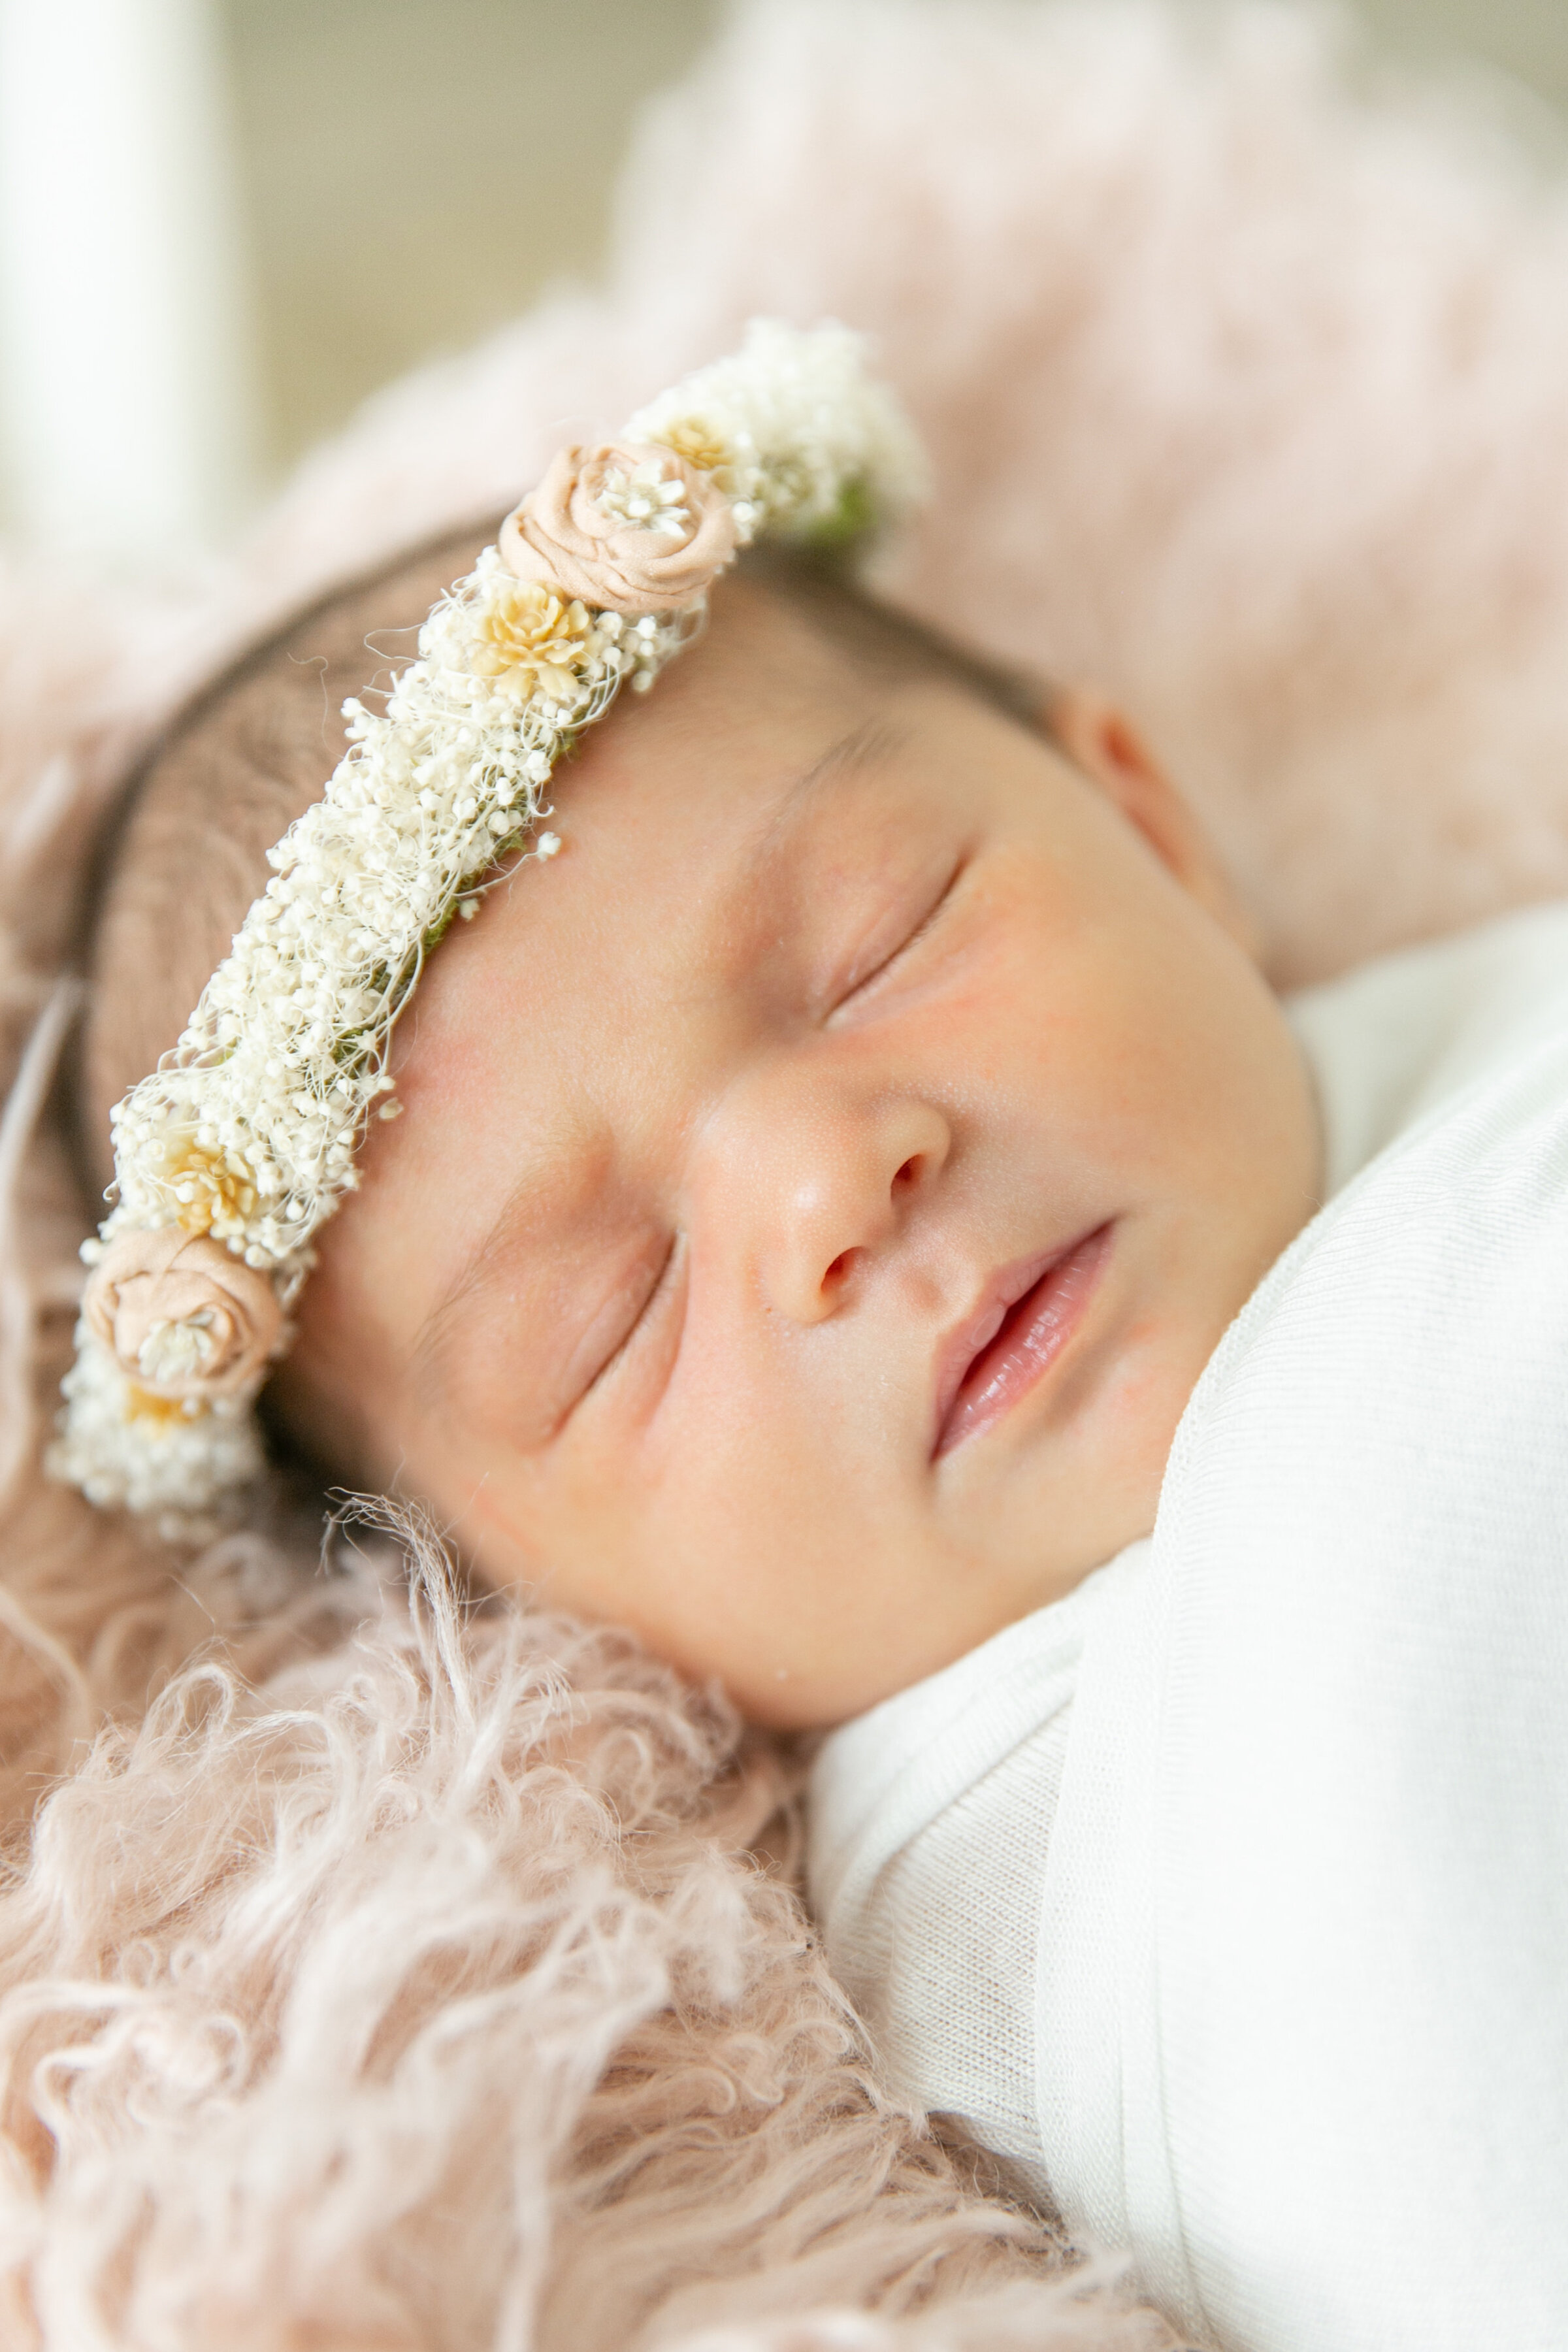 Karlie Colleen Photography - Arizona Newborn photography - Olivia-6